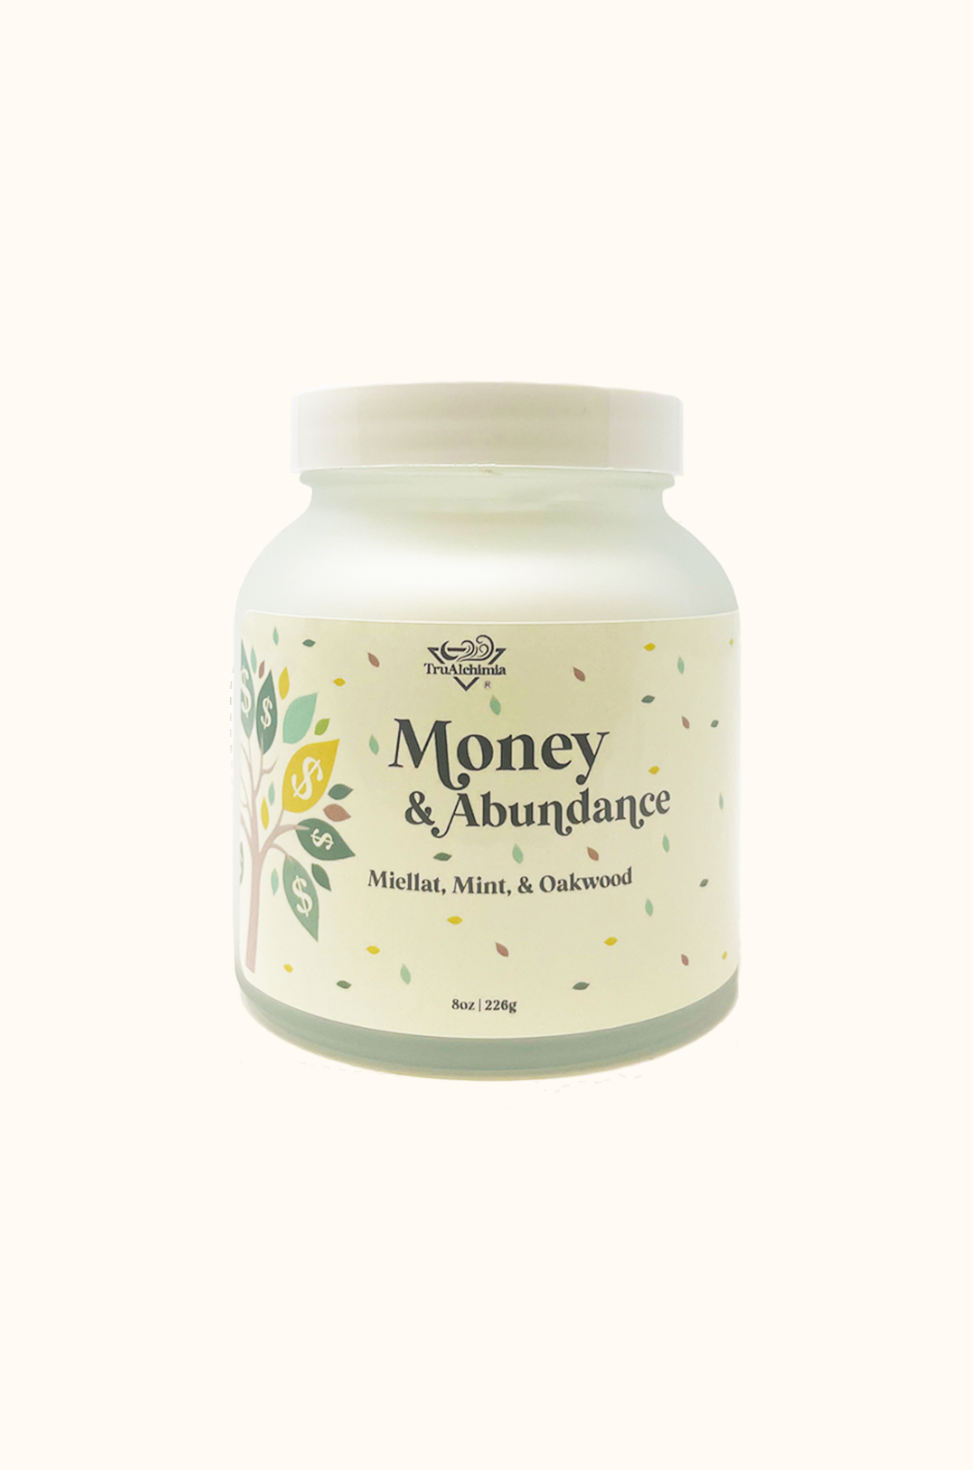 Money & Abundance Candle